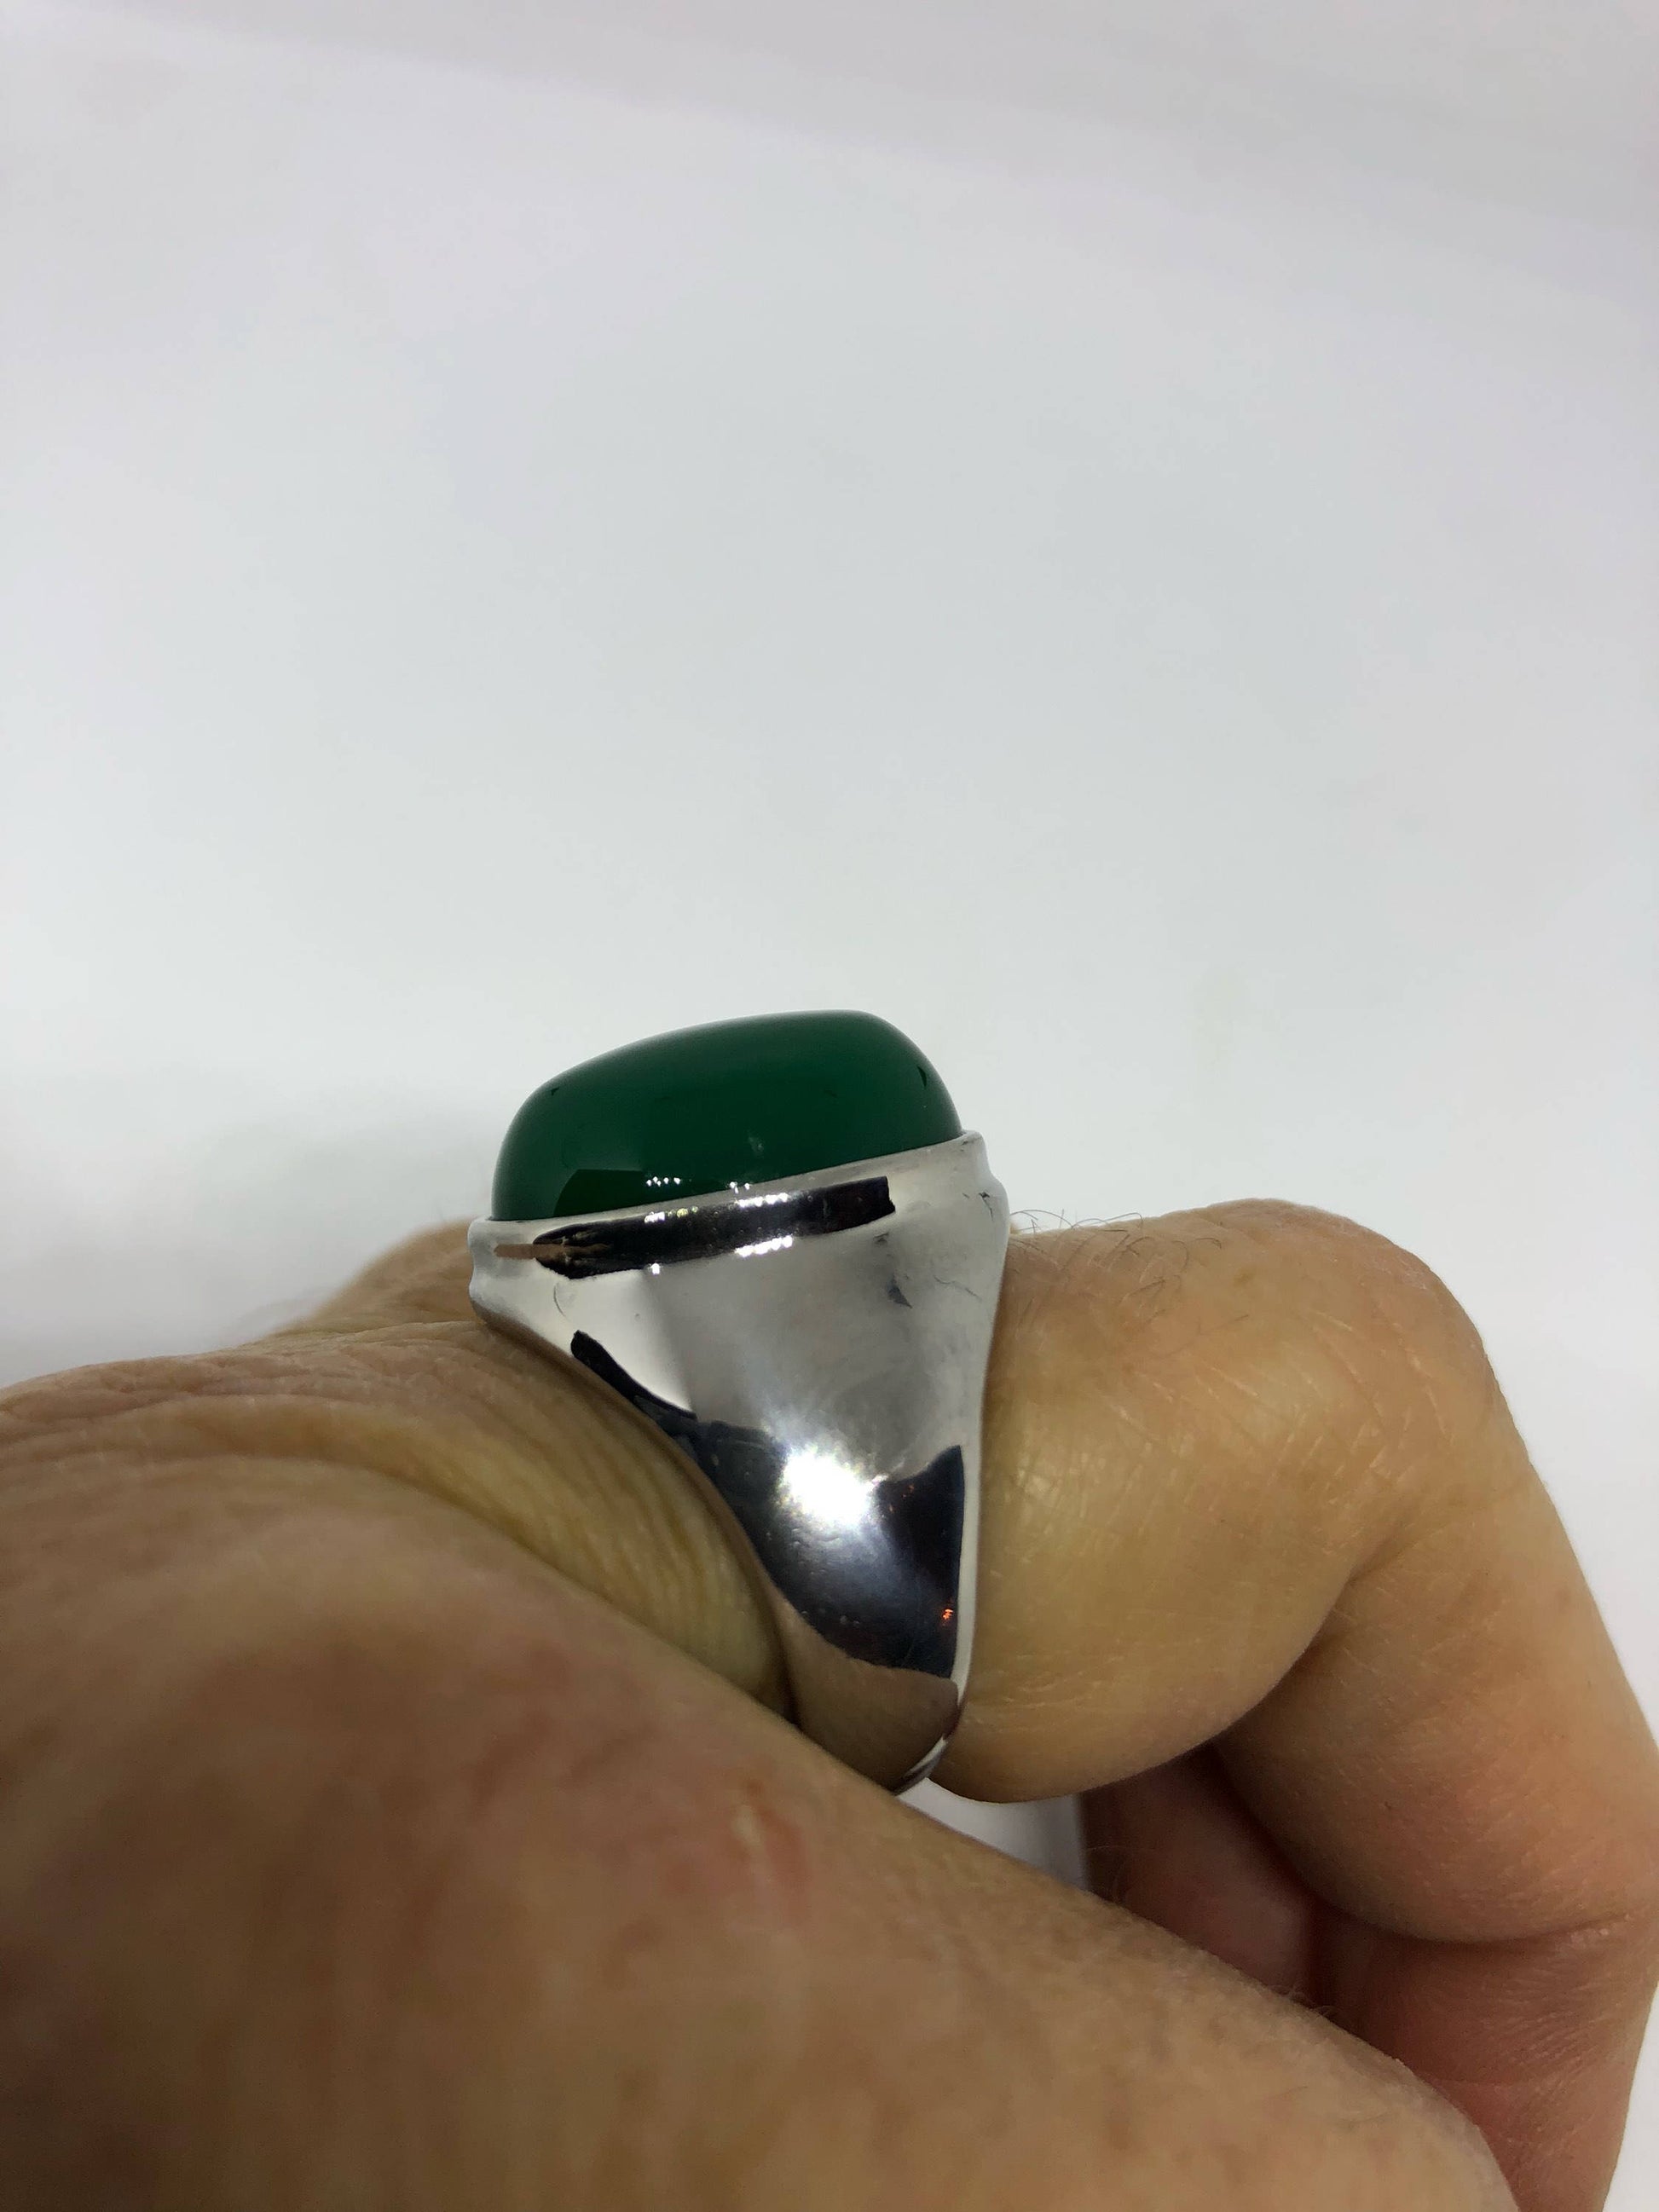 Vintage Silver Stainless Steel Genuine Green Onyx Mens Ring